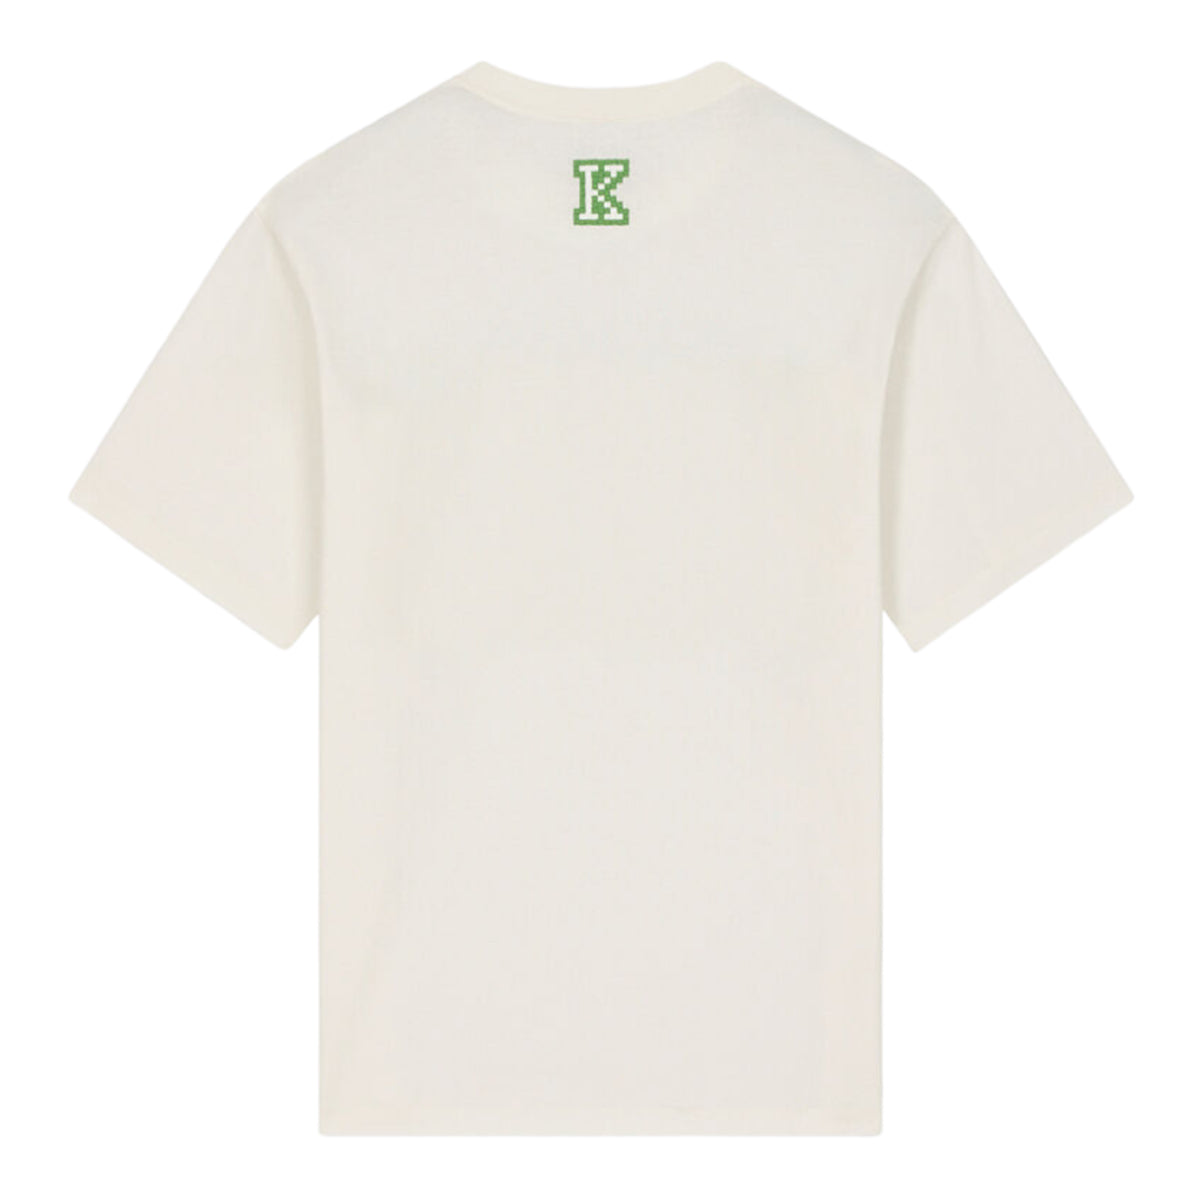 Kenzo Men's 'Pixels' Oversized T-Shirt